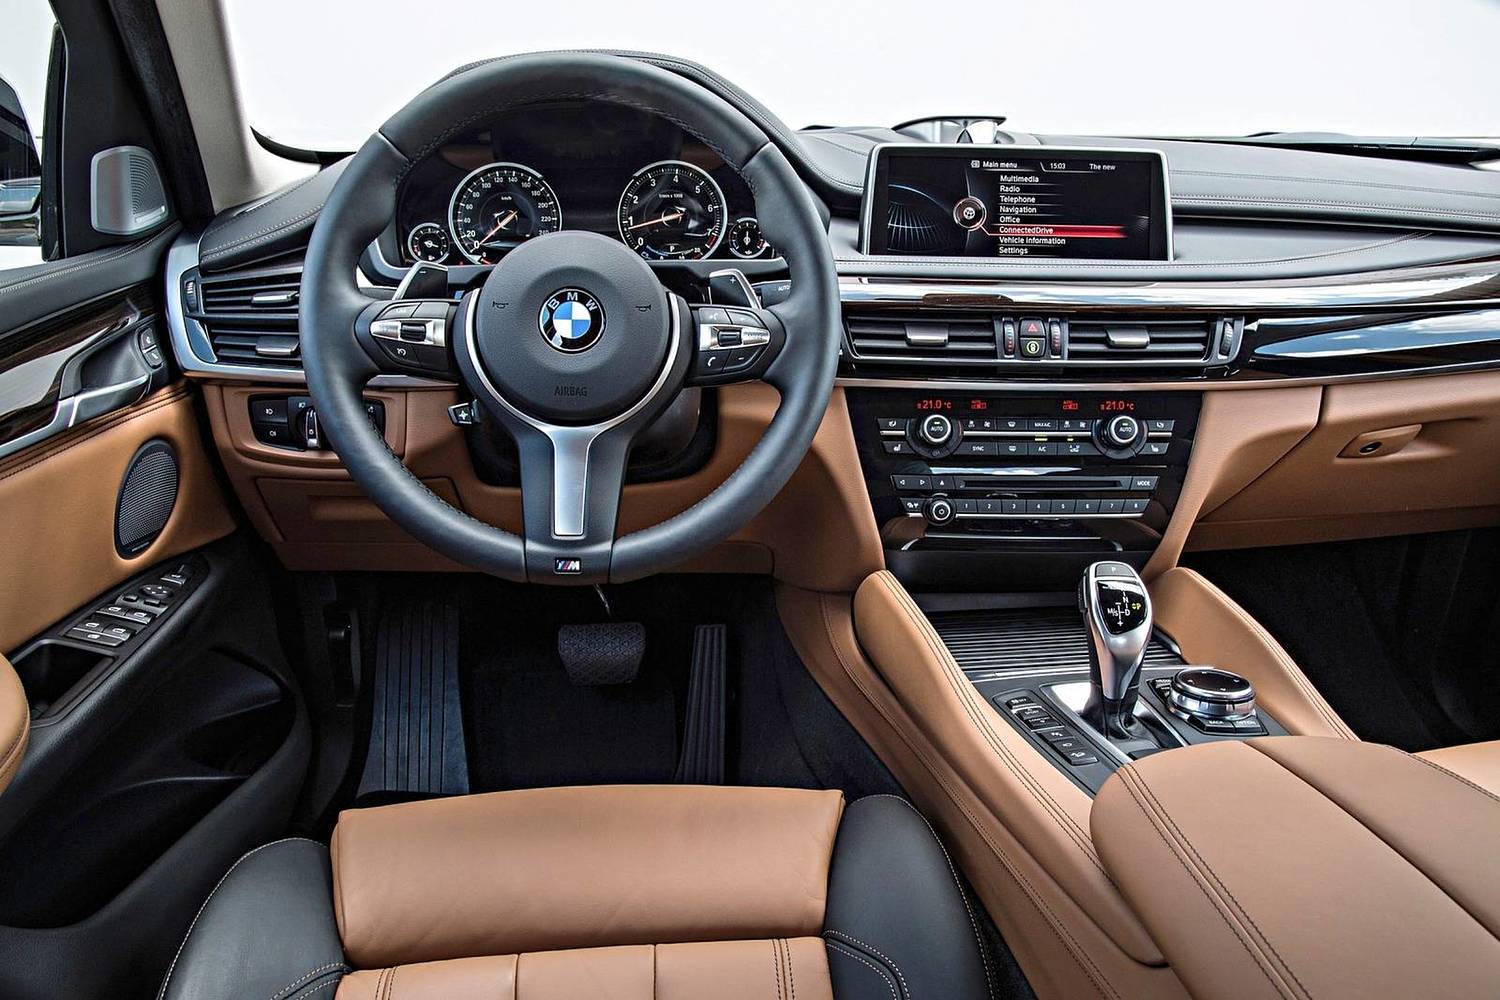 BMW X6 xDrive50i 4dr SUV Interior (2016 model year shown)